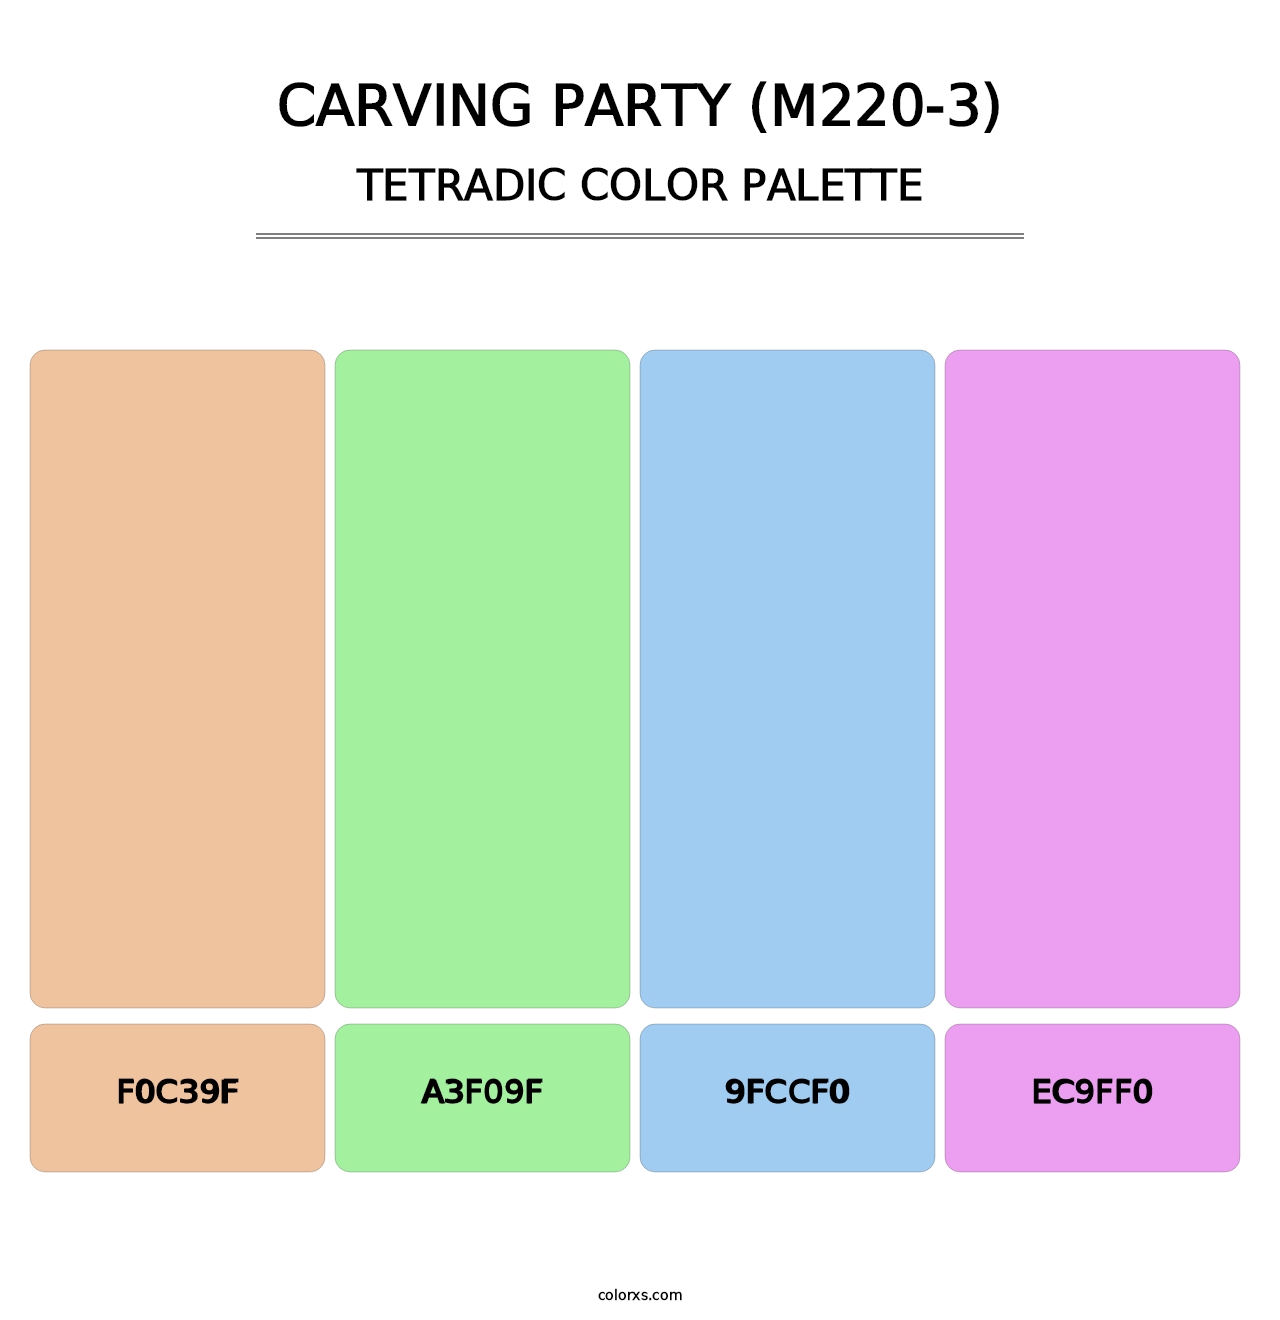 Carving Party (M220-3) - Tetradic Color Palette